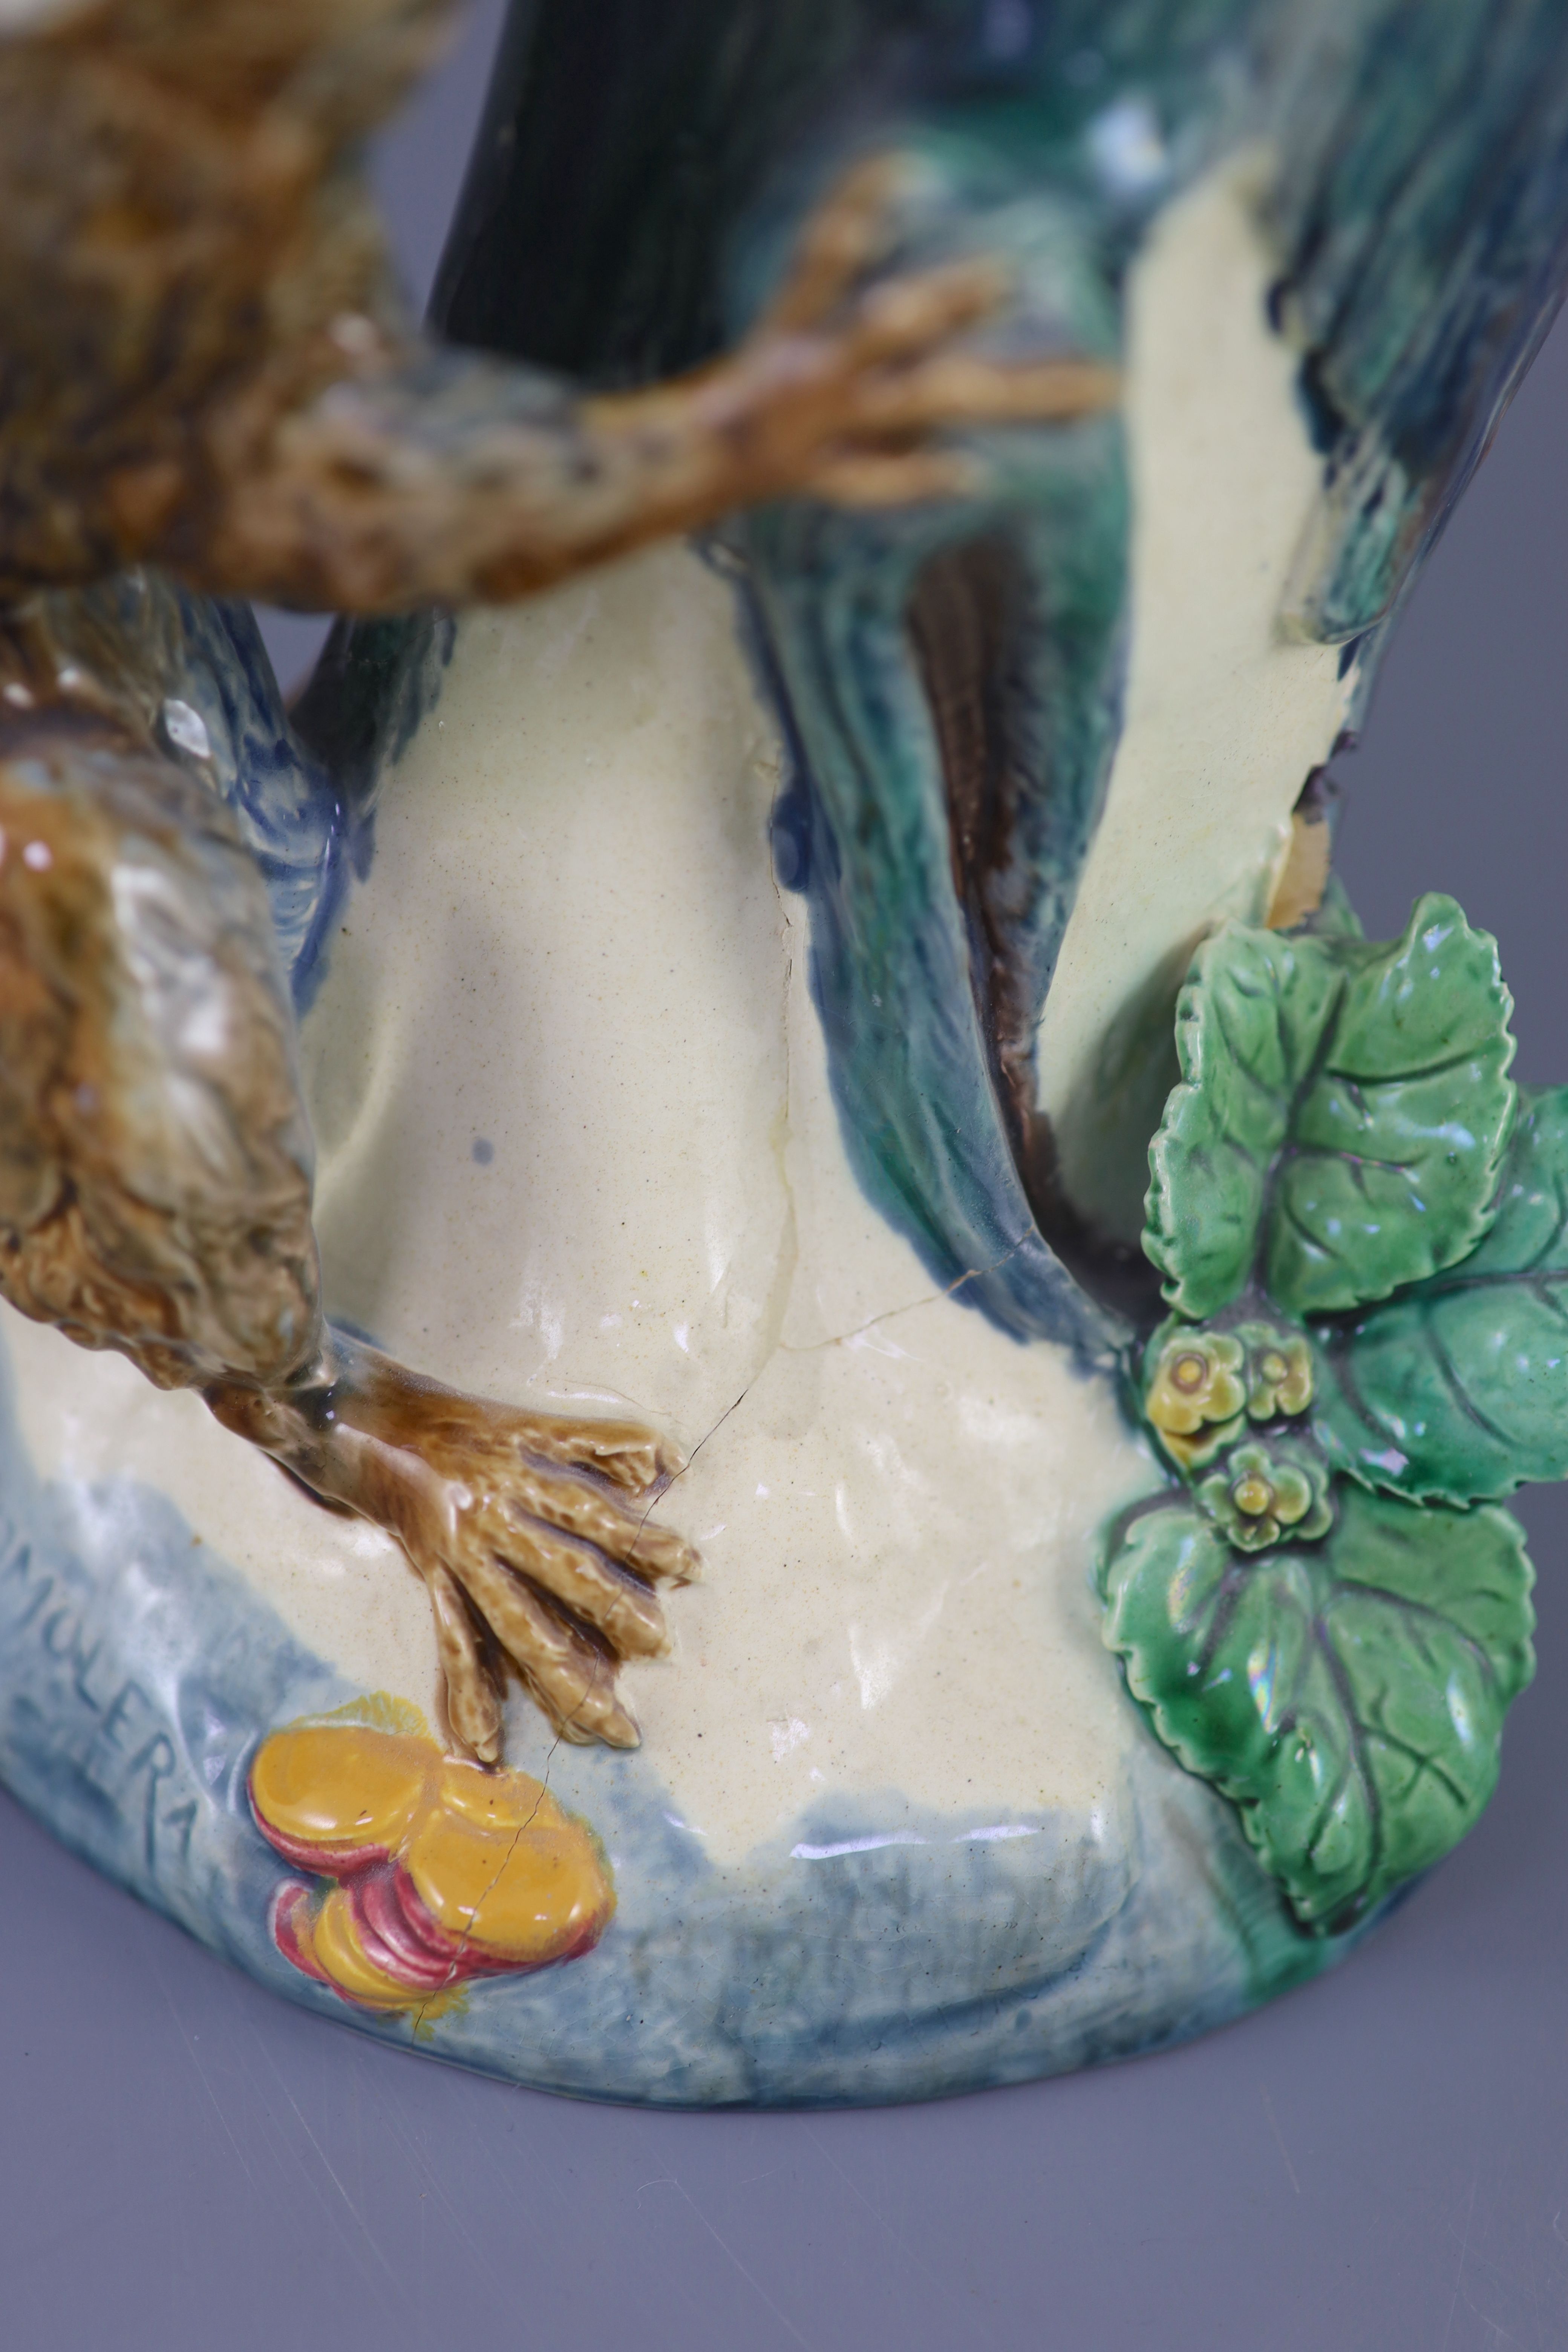 A rare Mintons majolica squirrel vase, modelled by Paul Comolera, 28cm high